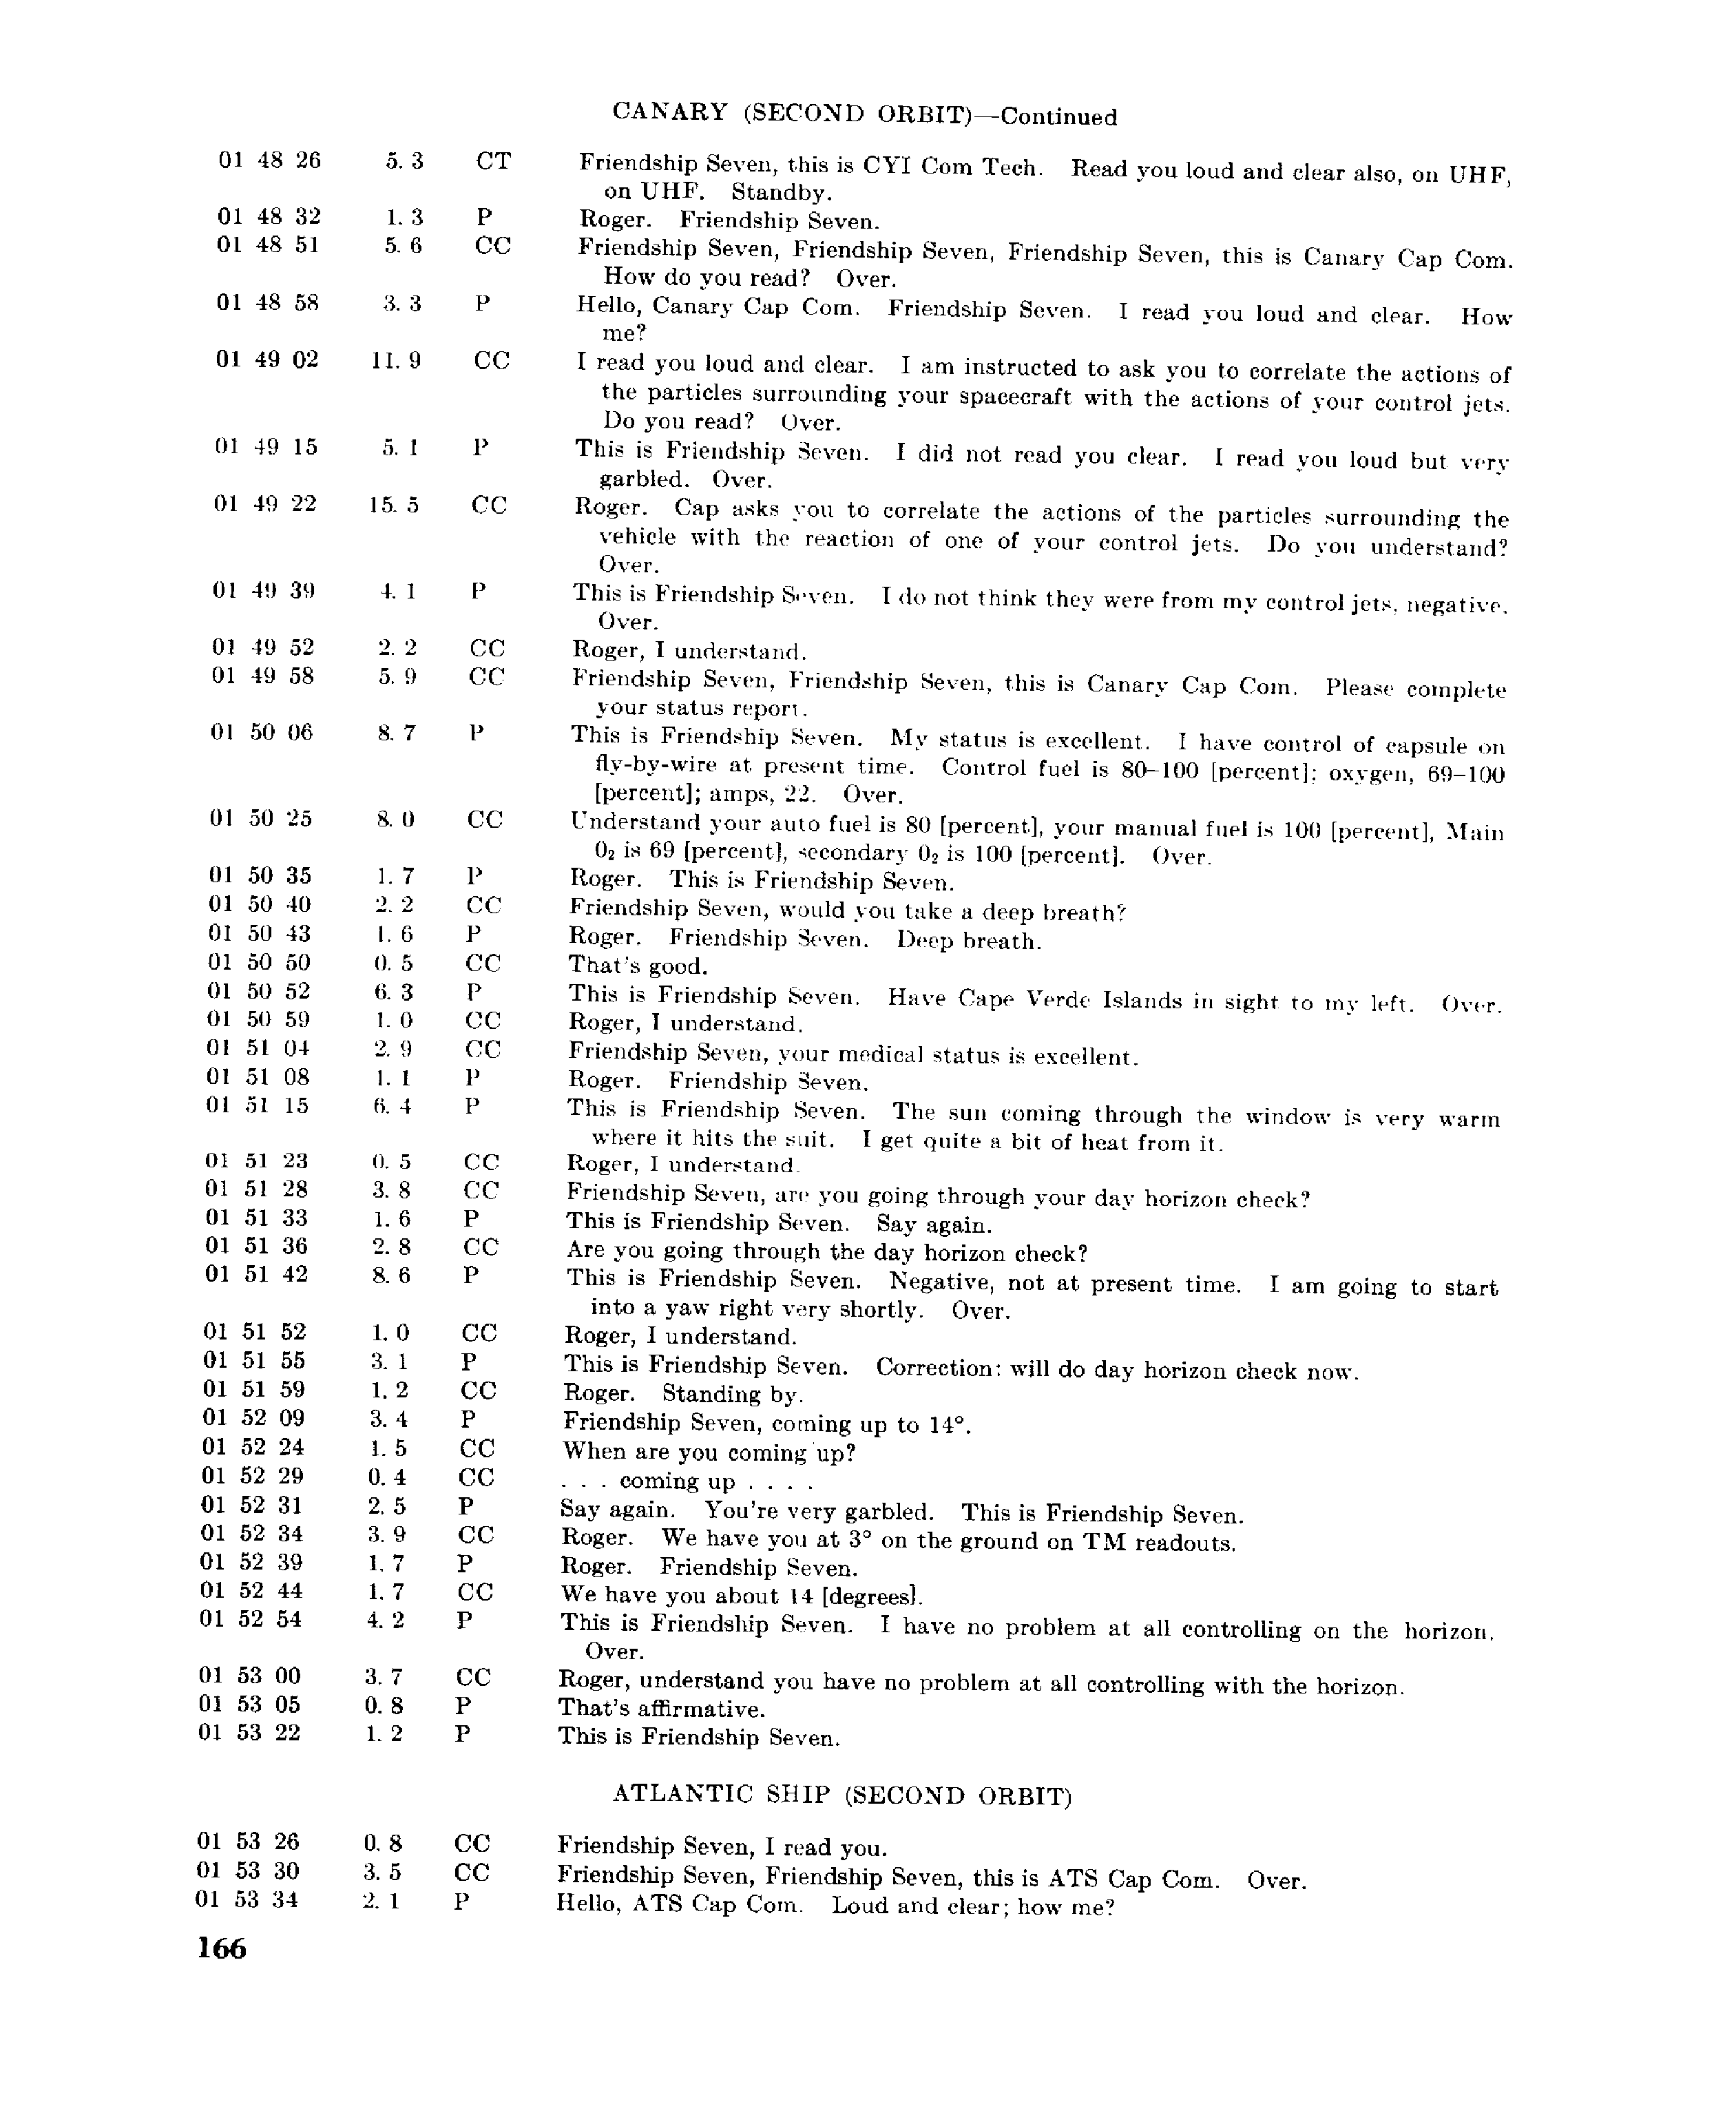 Page 165 of Mercury 6’s original transcript